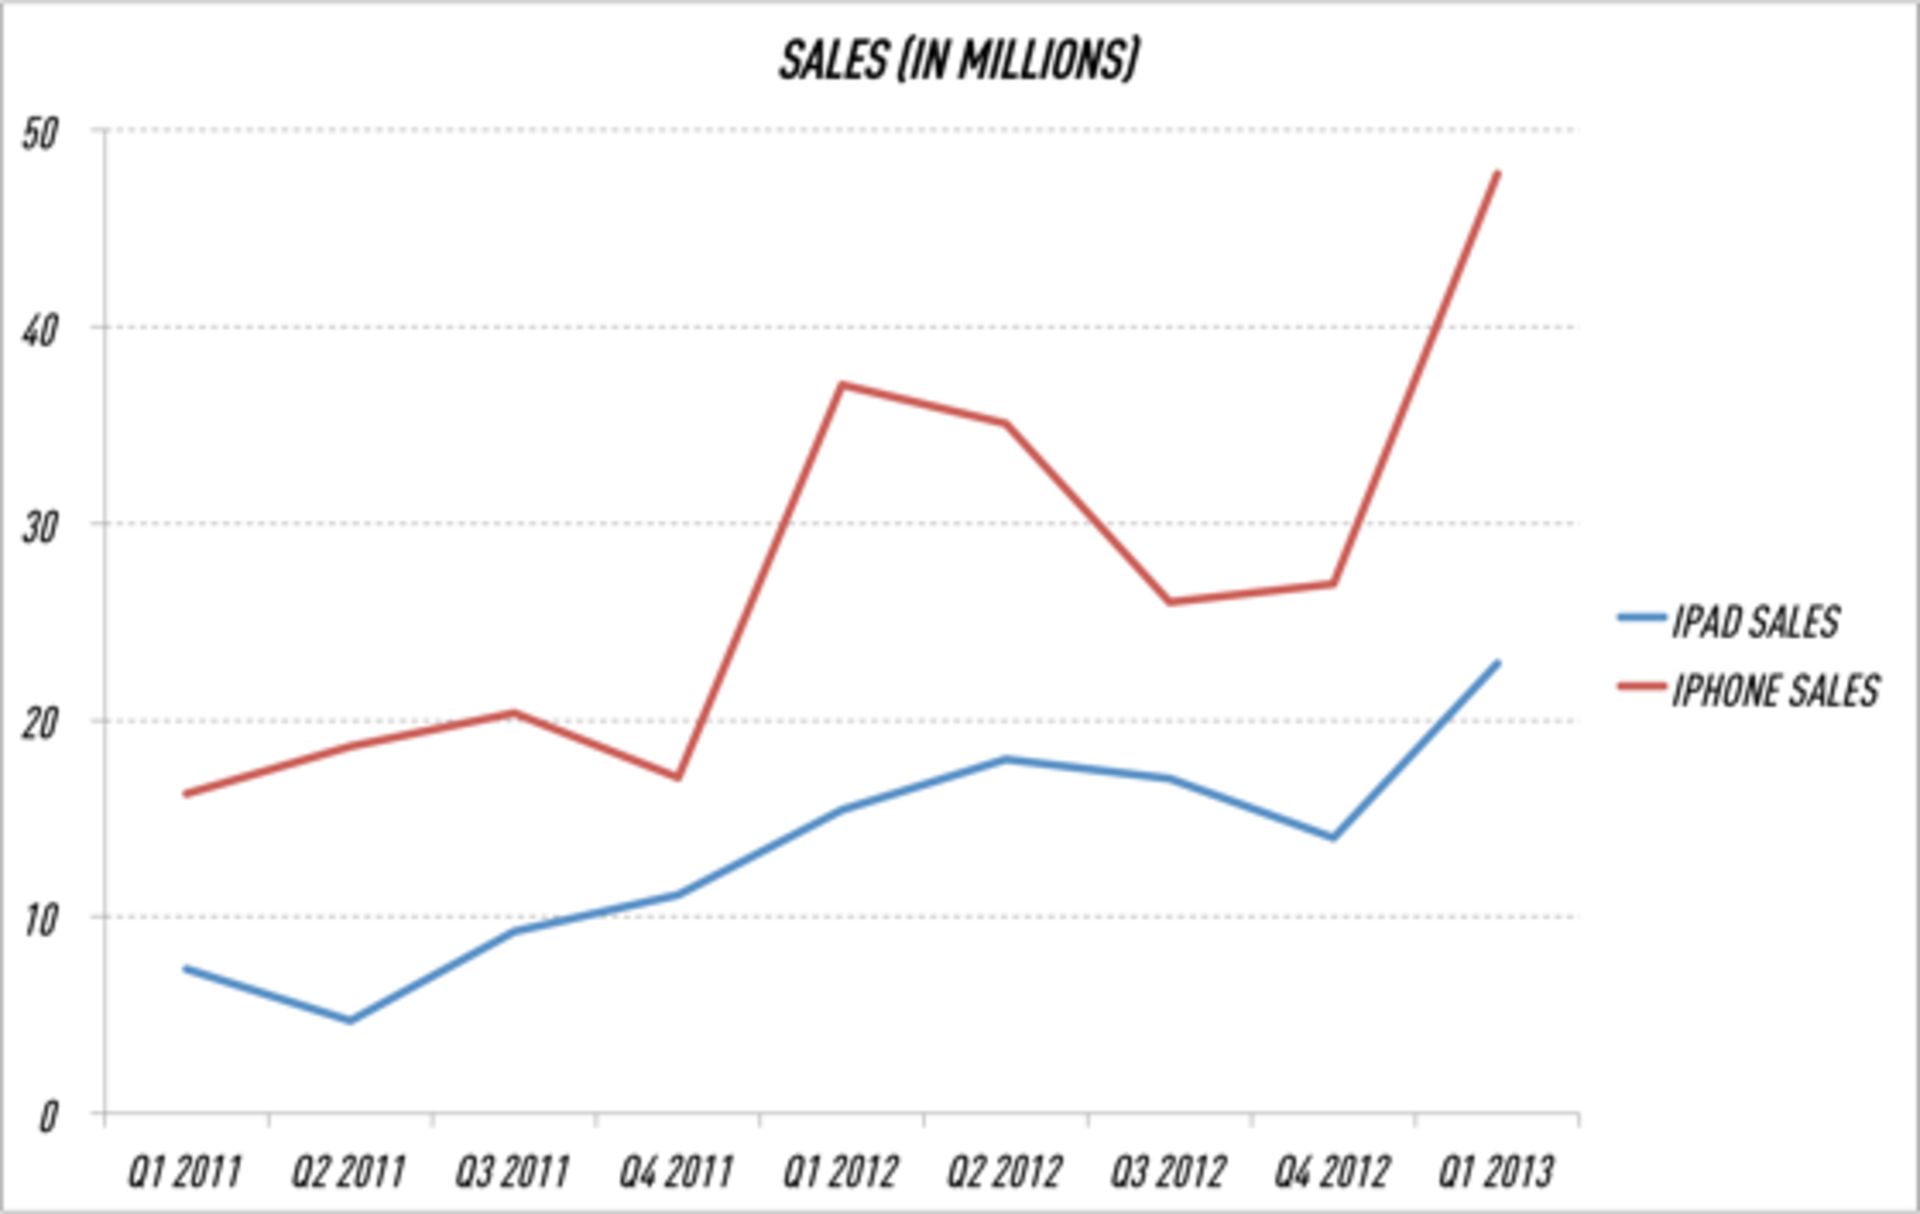 iPhone and iPad sales